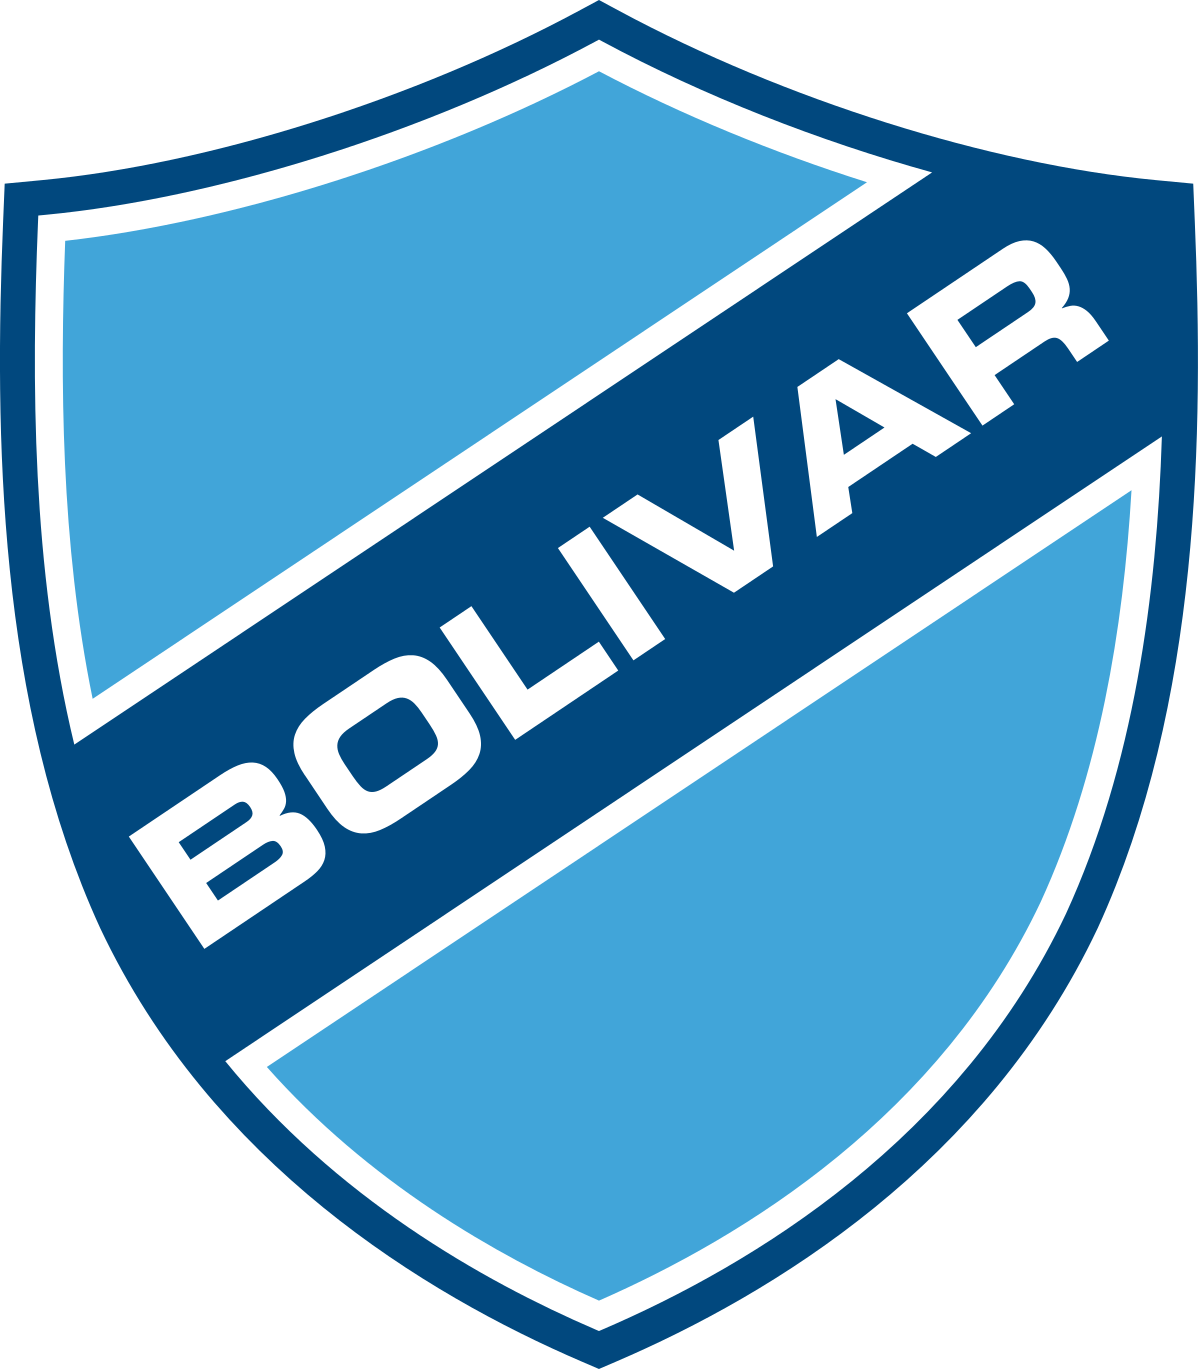 Real Santa Cruz vs. Bolivar. Pronóstico: Bolivar se enfrenta a una rival que pasa por un mal momento dirigencial